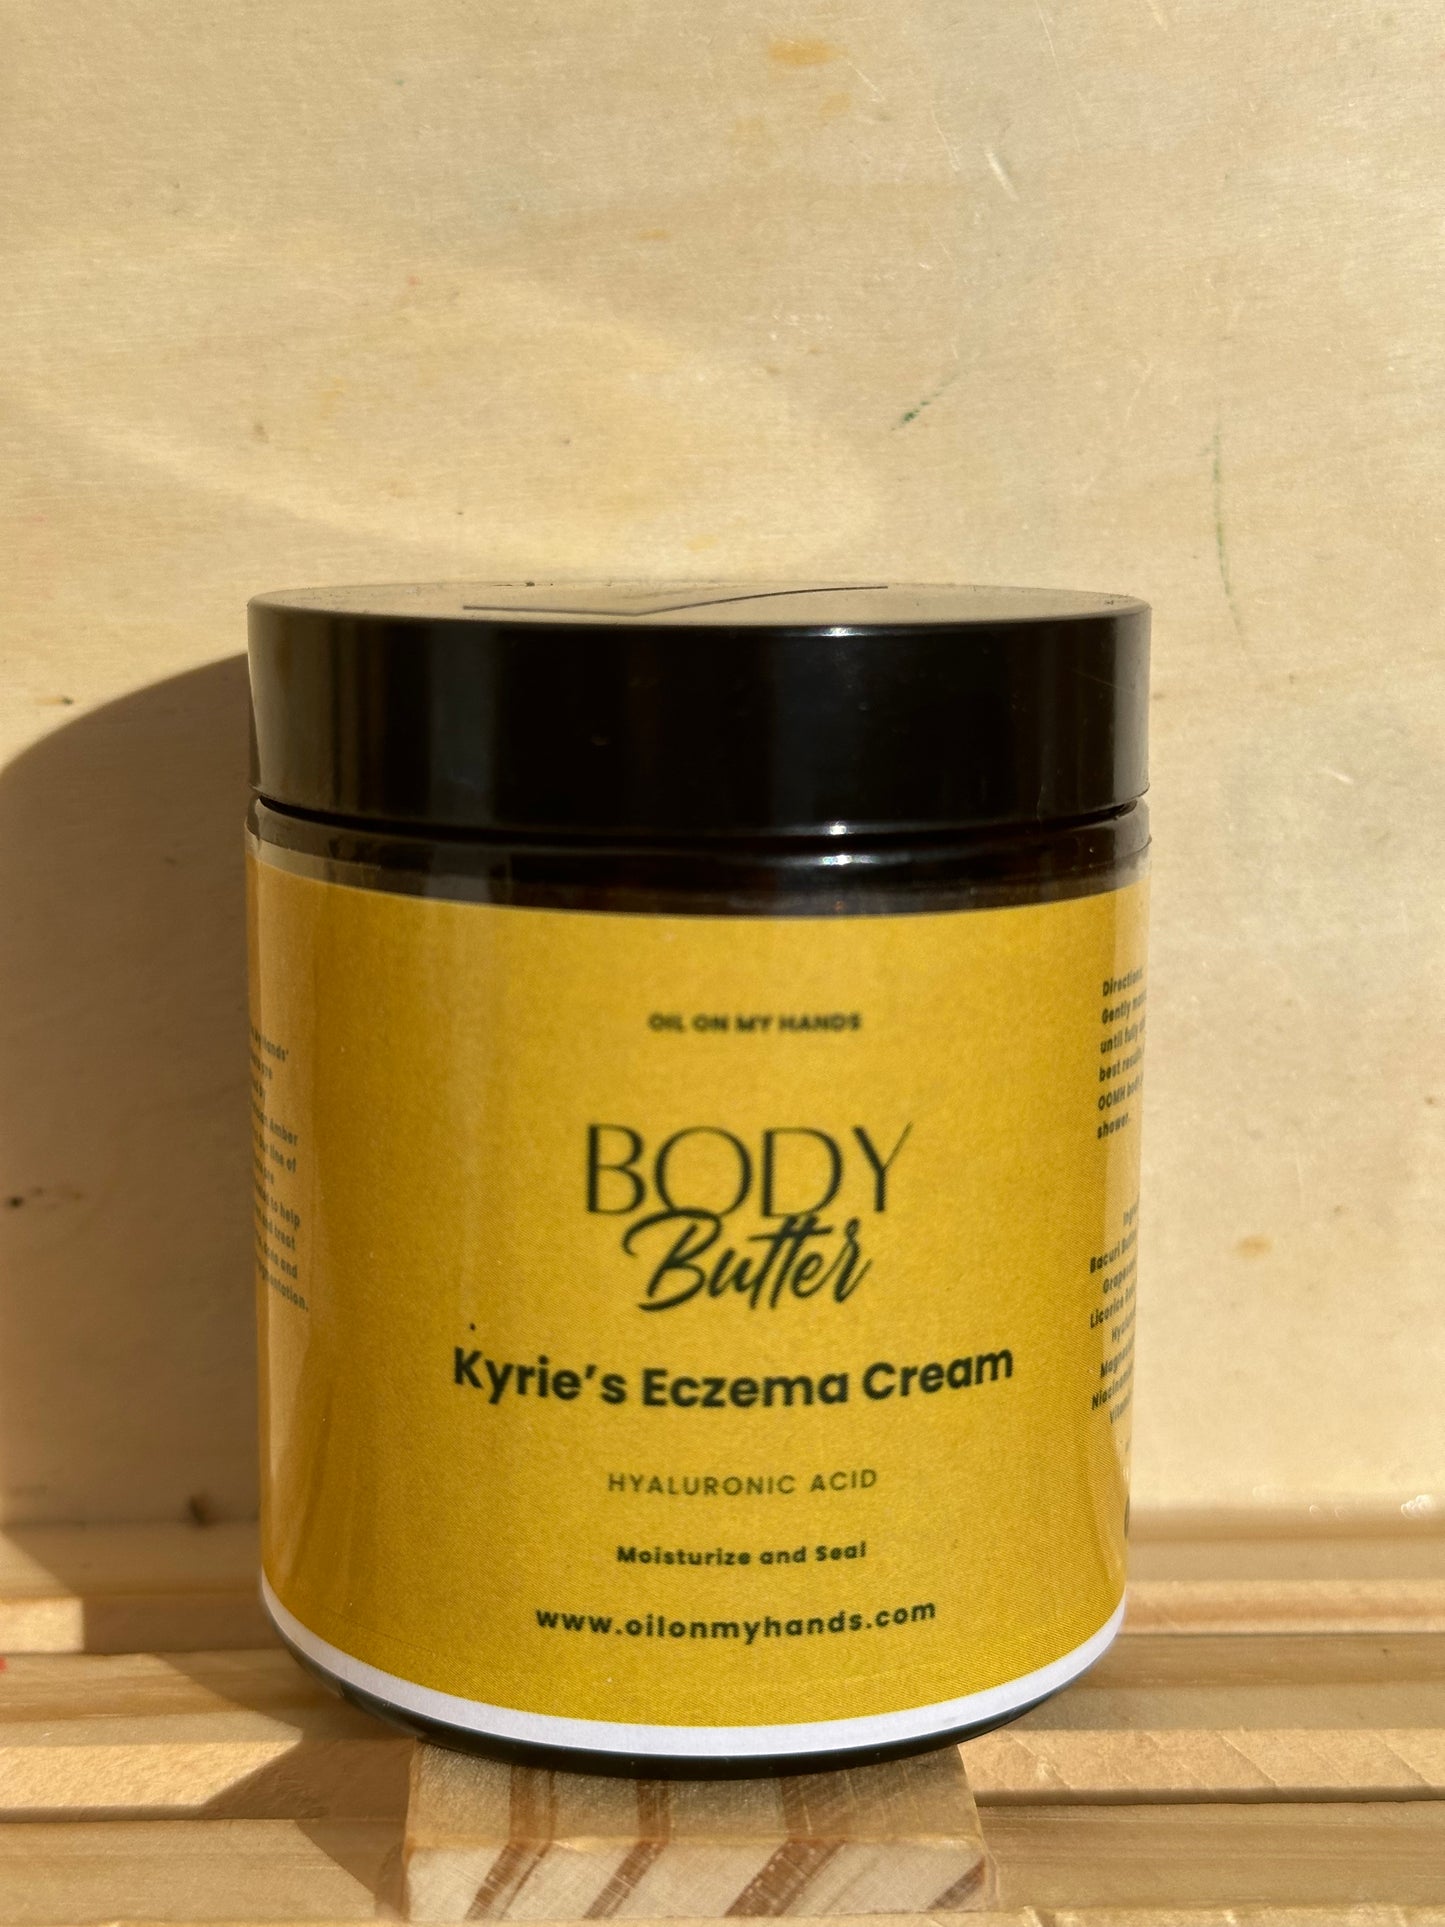 Kyrie’s Eczema Cream